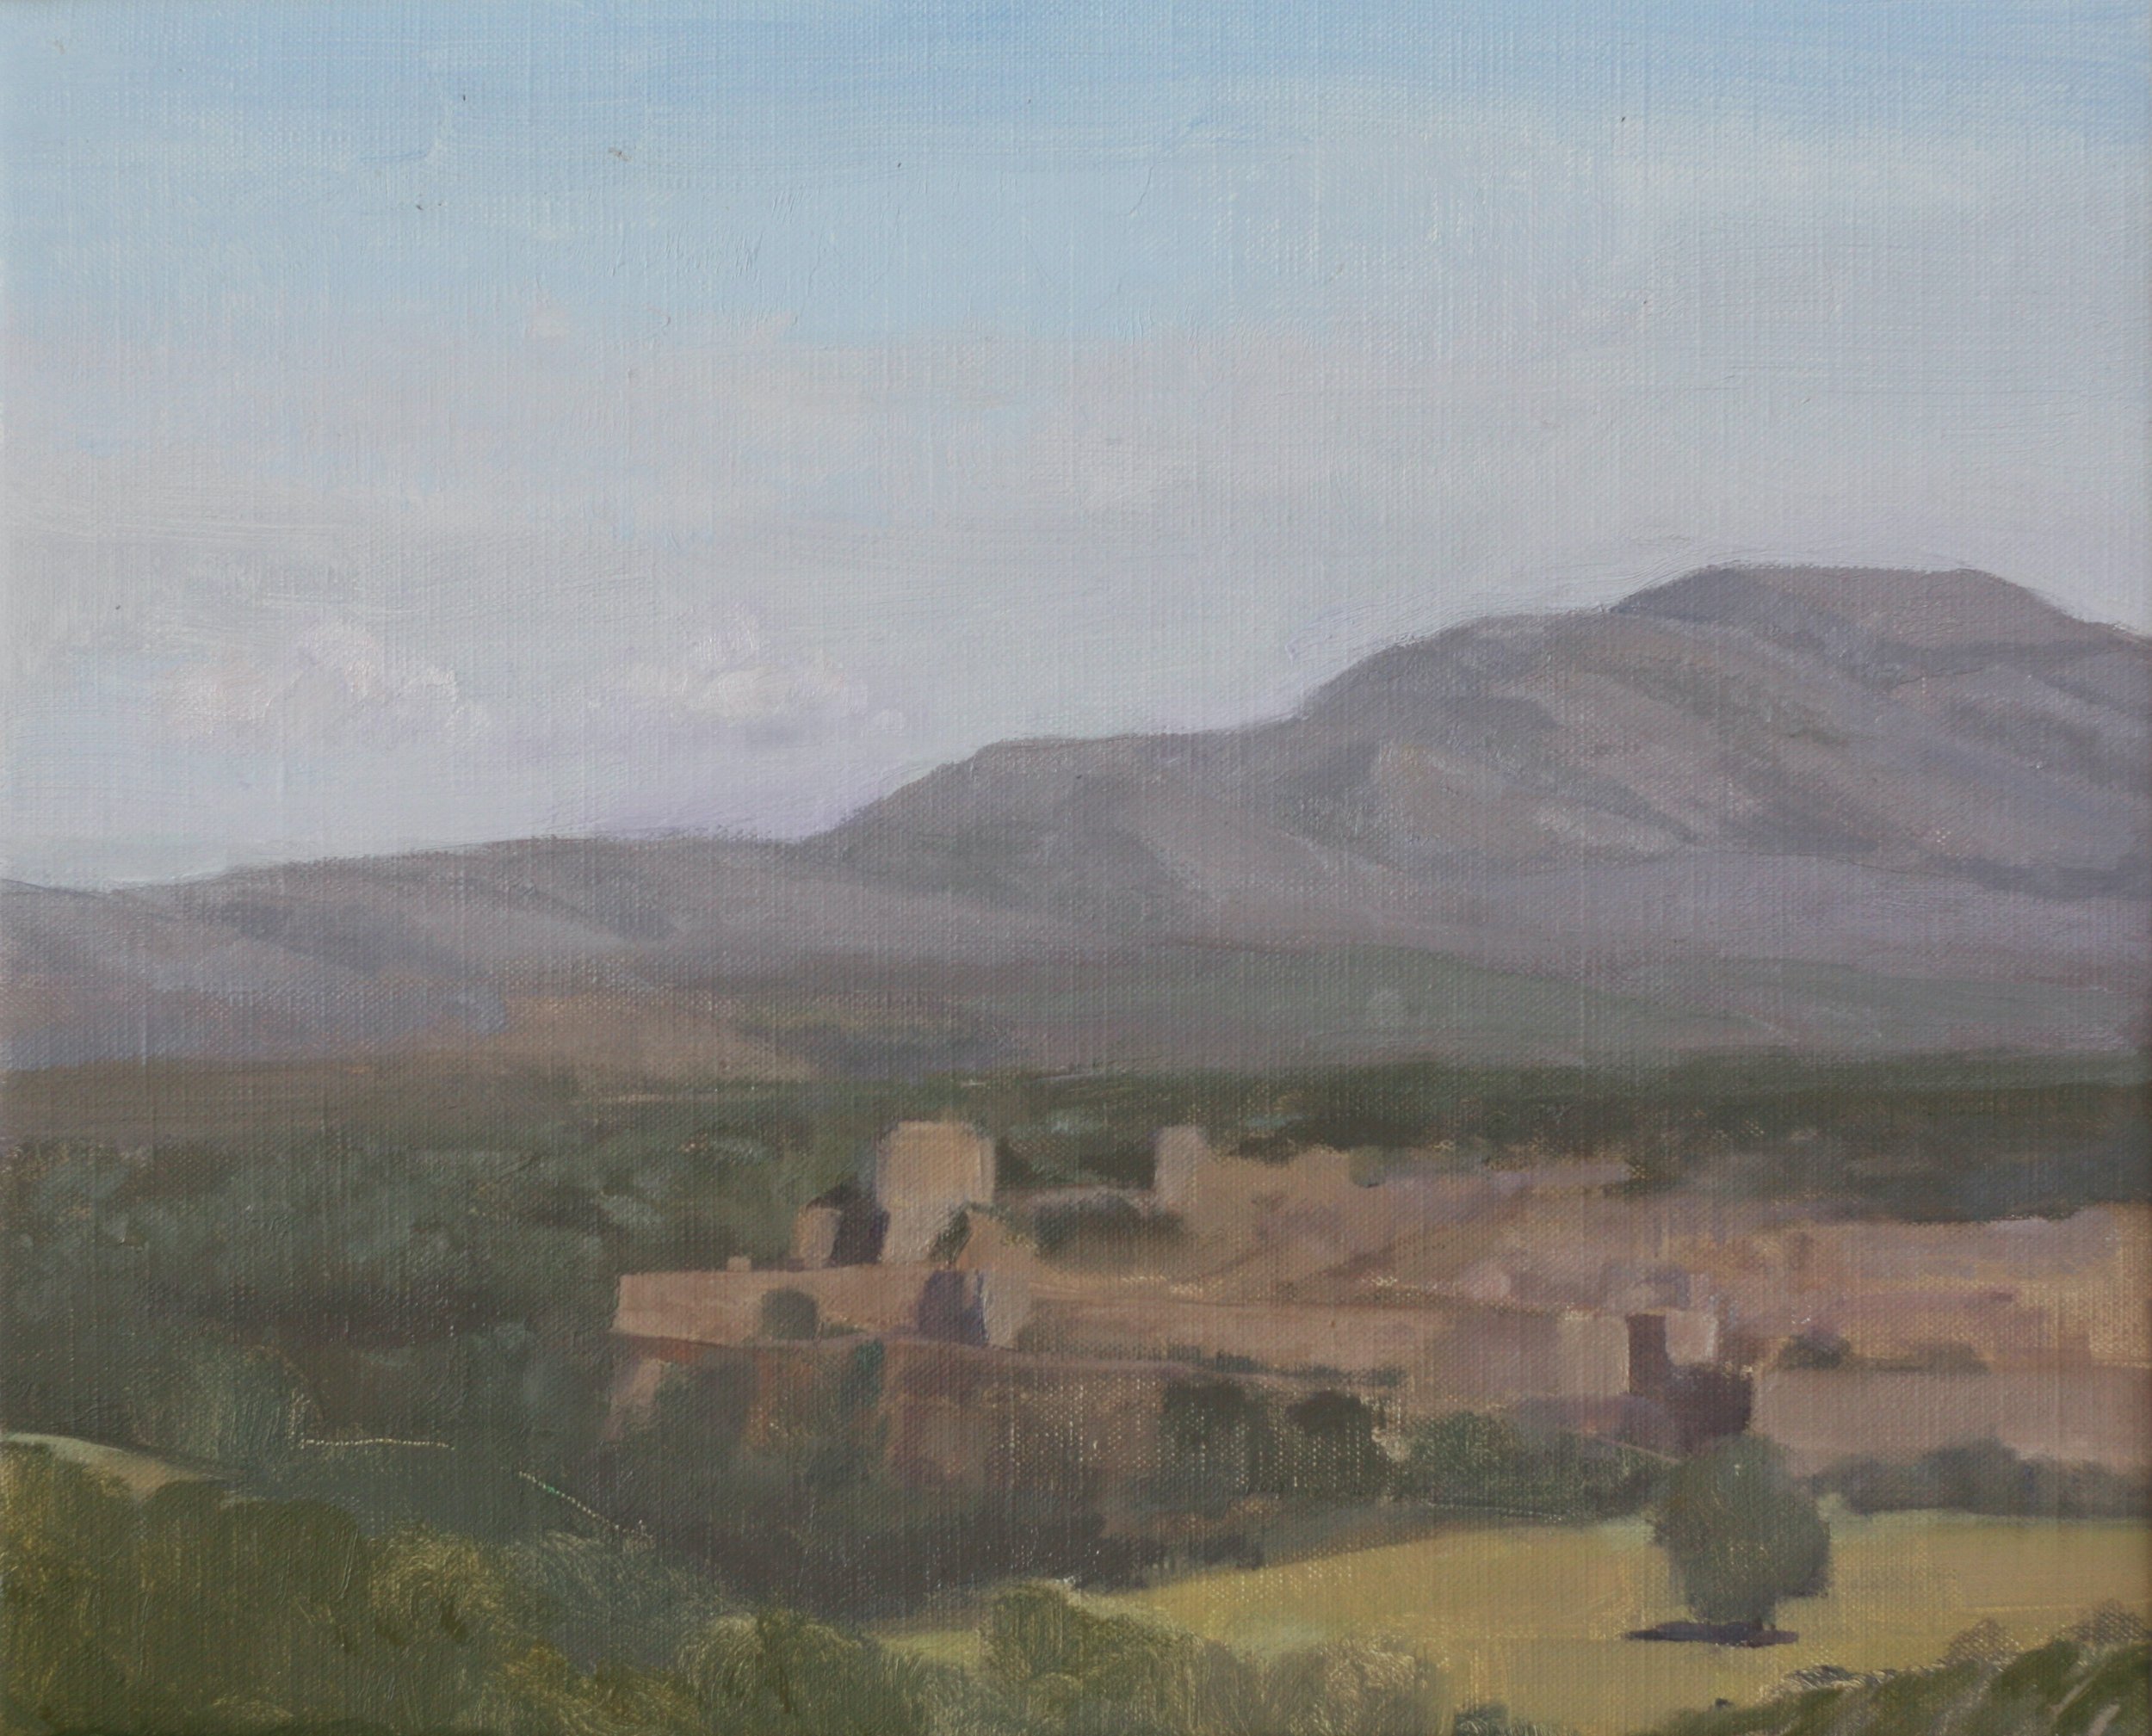 View of Civita Castellana from the Via Flaminia, 2013